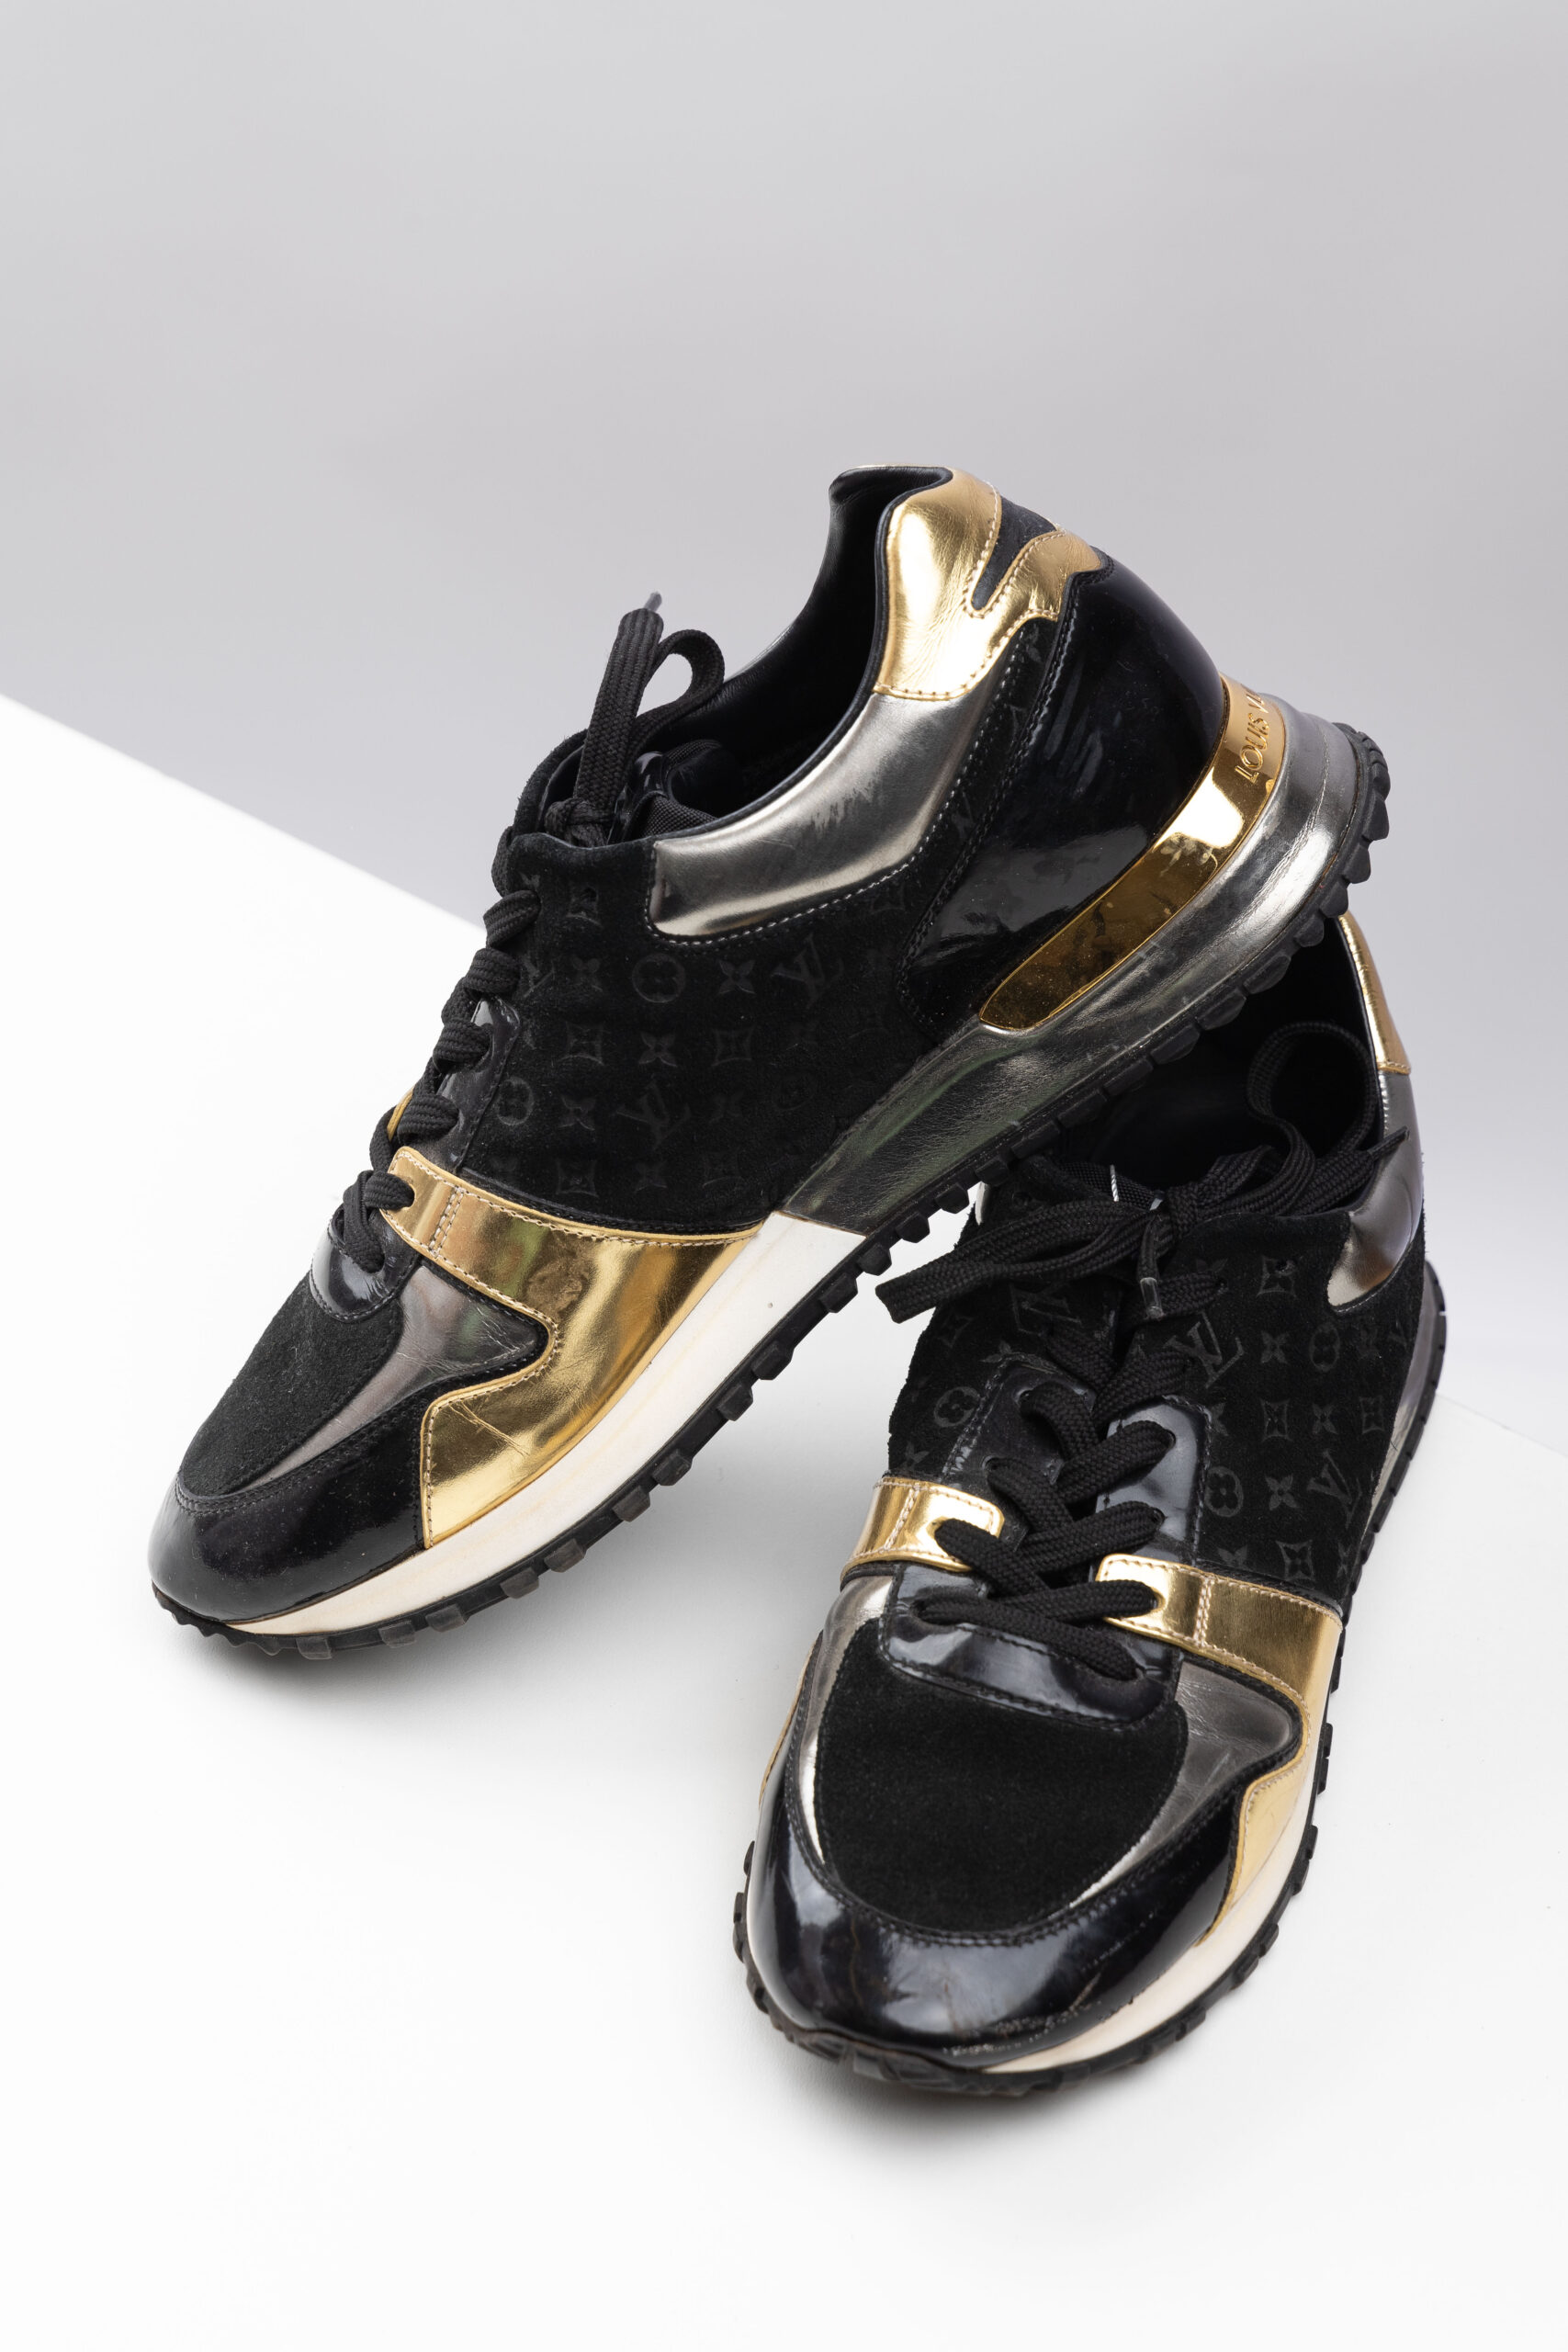 Tênis Louis Vuitton Monogram Sneakers Preto e Dourado 38